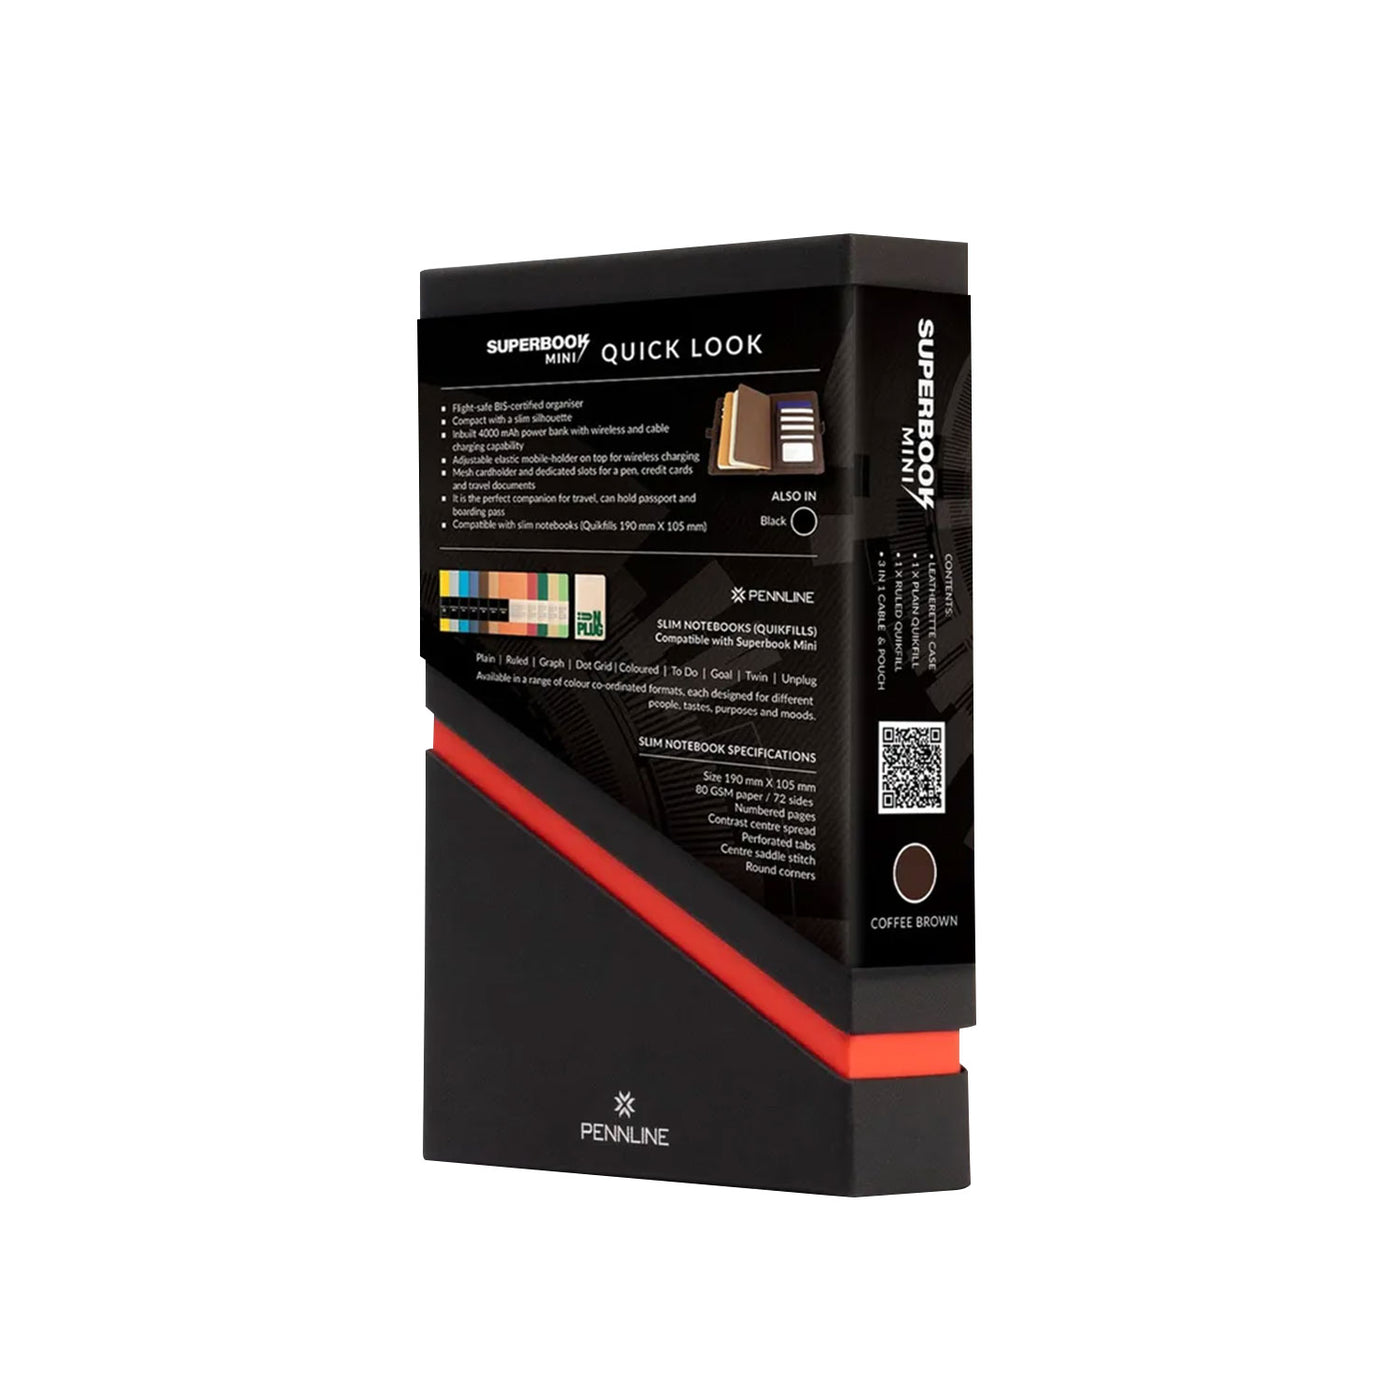 Pennline Superbook Mini Organiser with Wireless Charging and 4000 mAh Powerbank - Coffee Brown